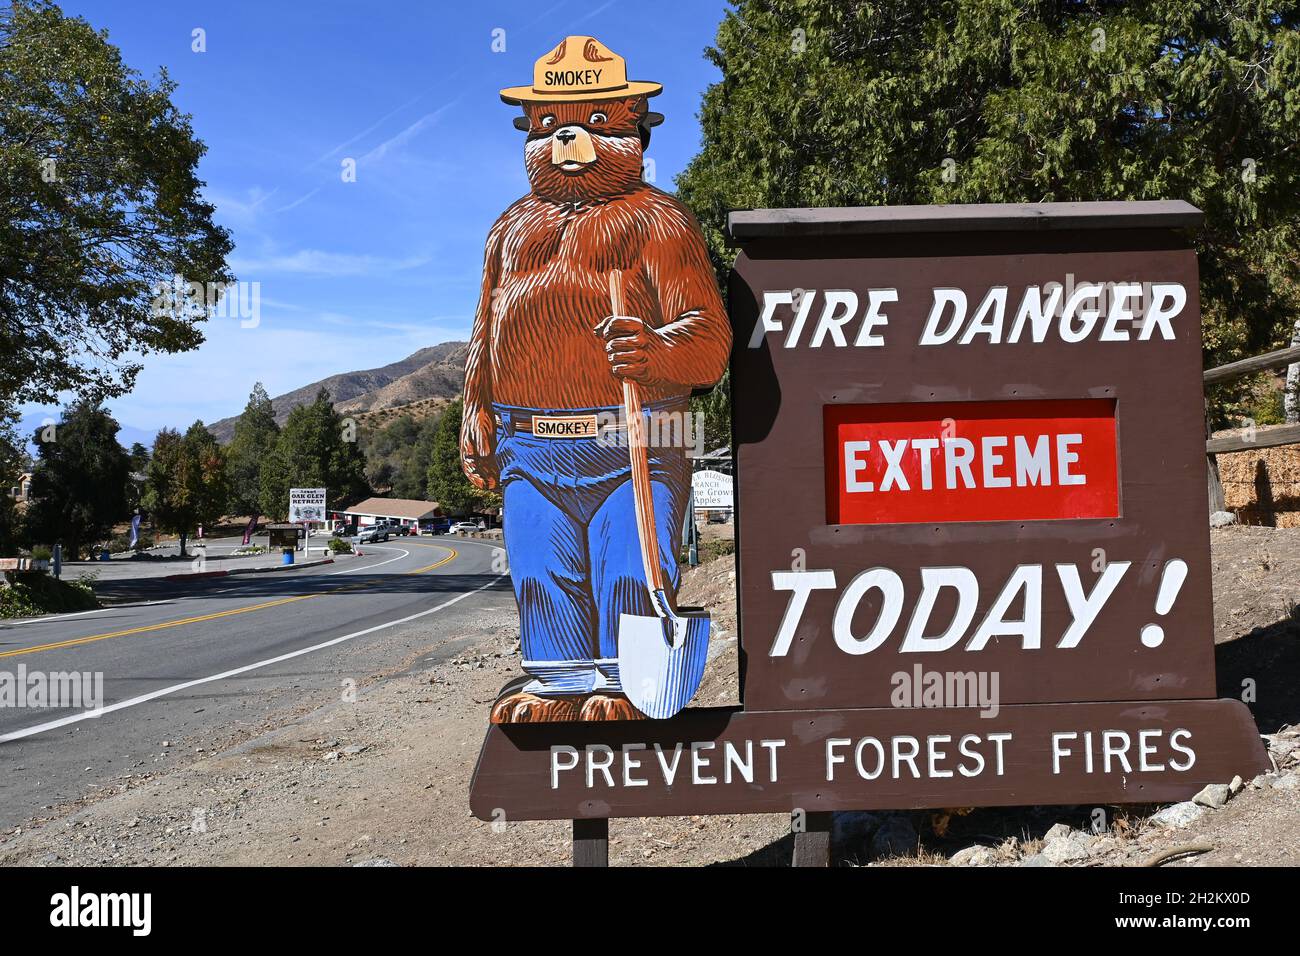 OAK GLEN, CALIFORNIA - 10 OCT 2021: Smokey the Bear Fire Dange sign in the foothills of  San Bernardino Mountains indicating extreme fire danger. Stock Photo